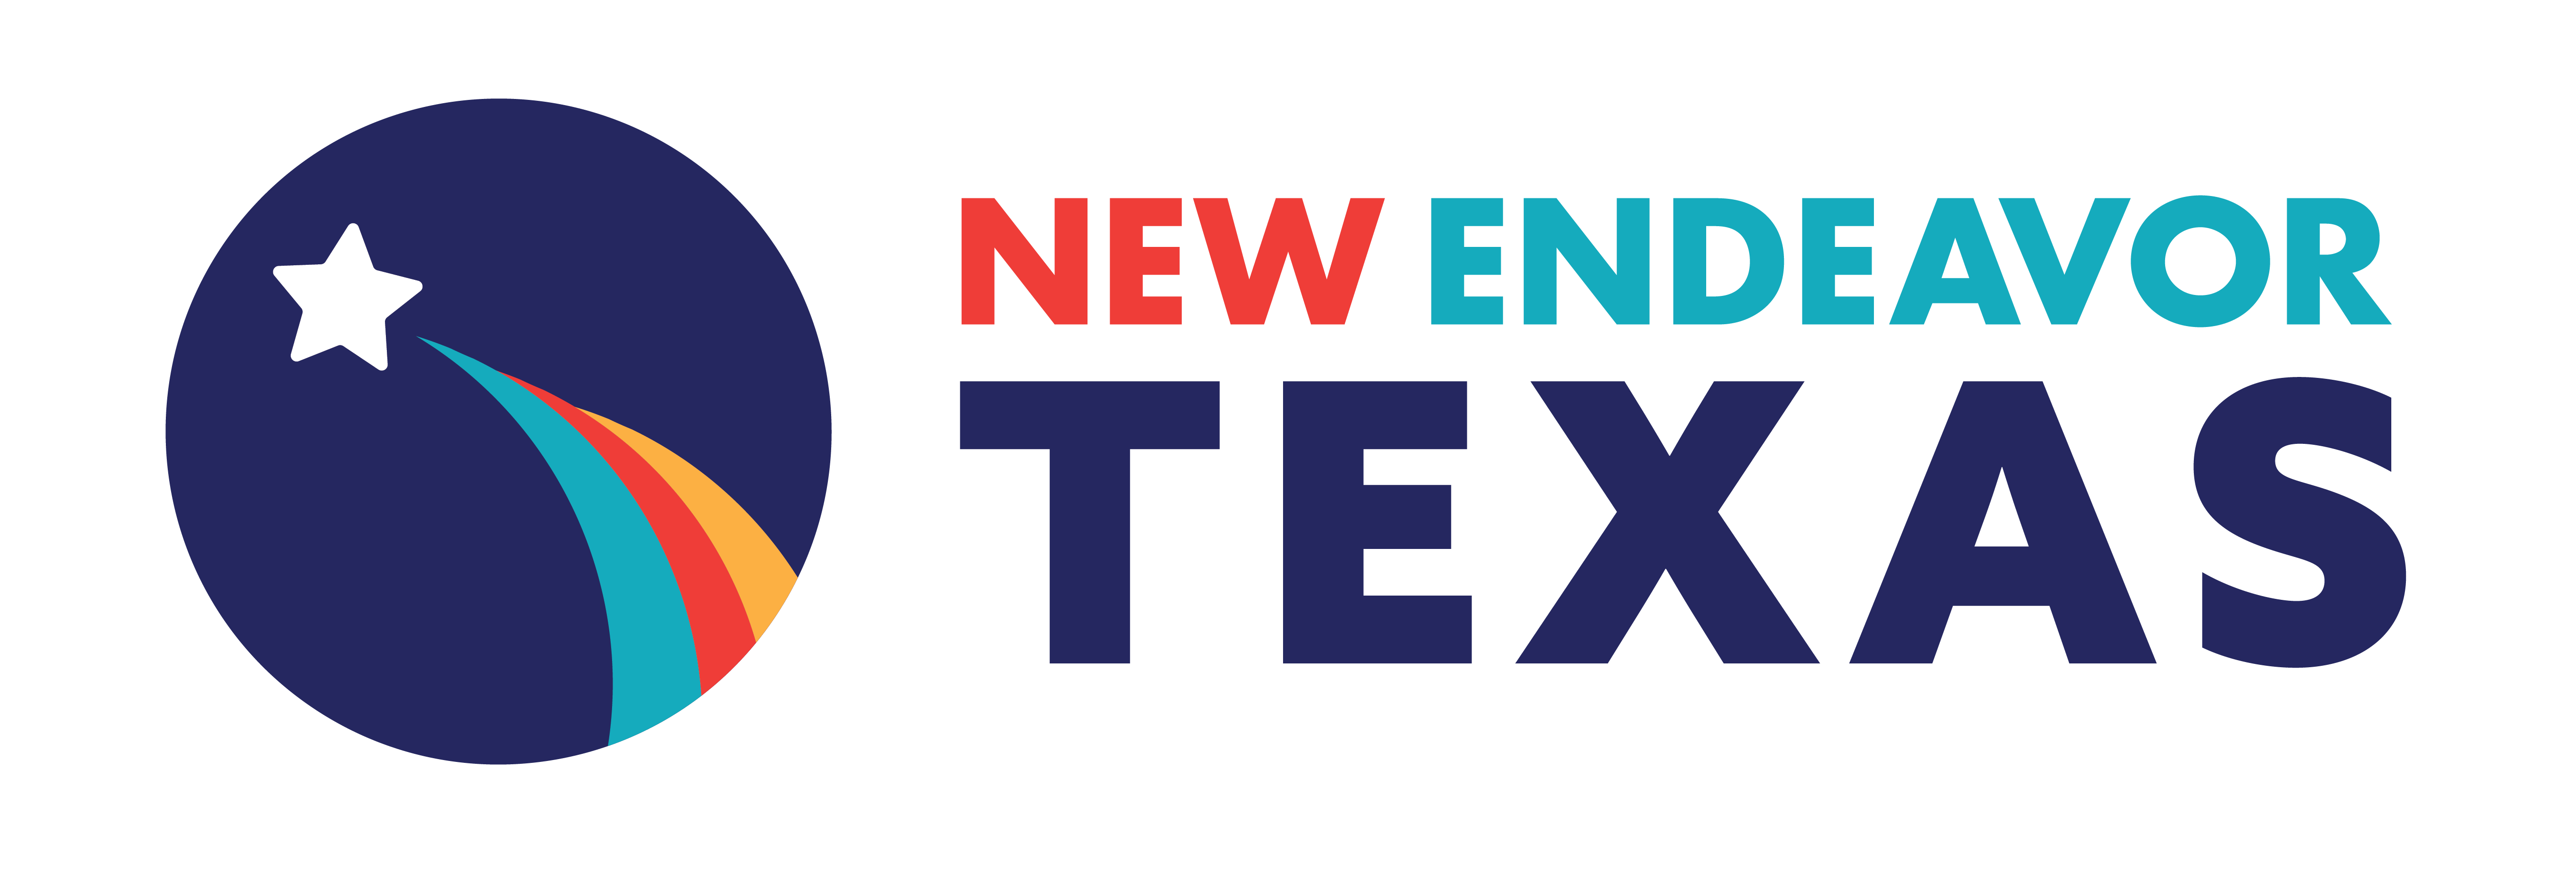 New Endeavor Texas